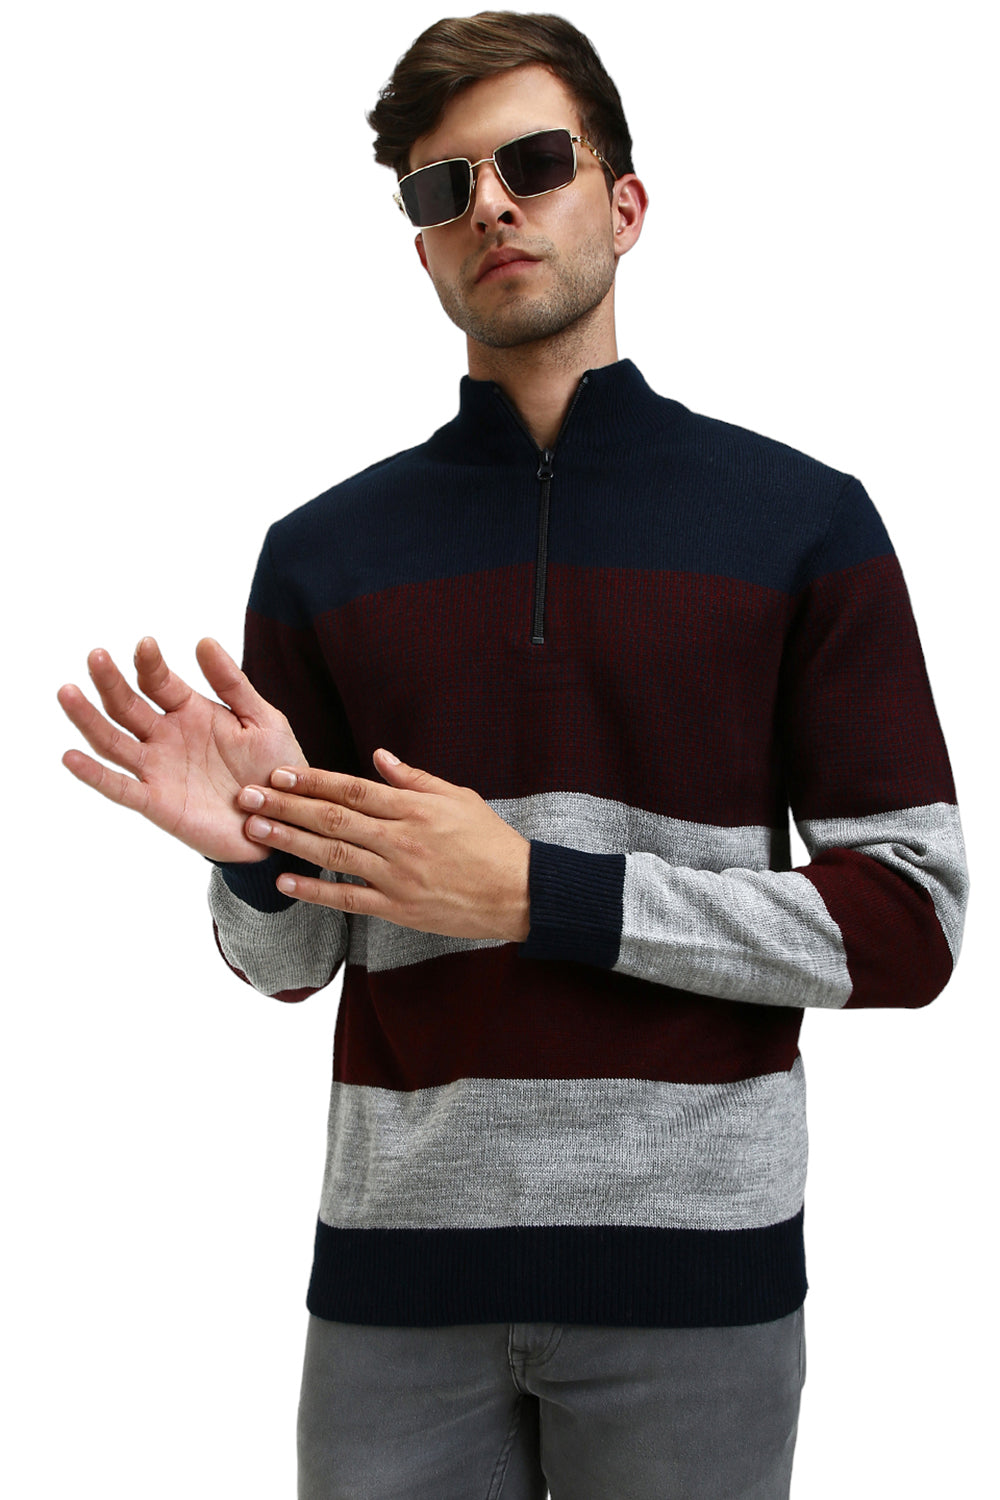 Dennis Lingo Men's Navy Striper Mock Full Sleeves Half Zip Sweater